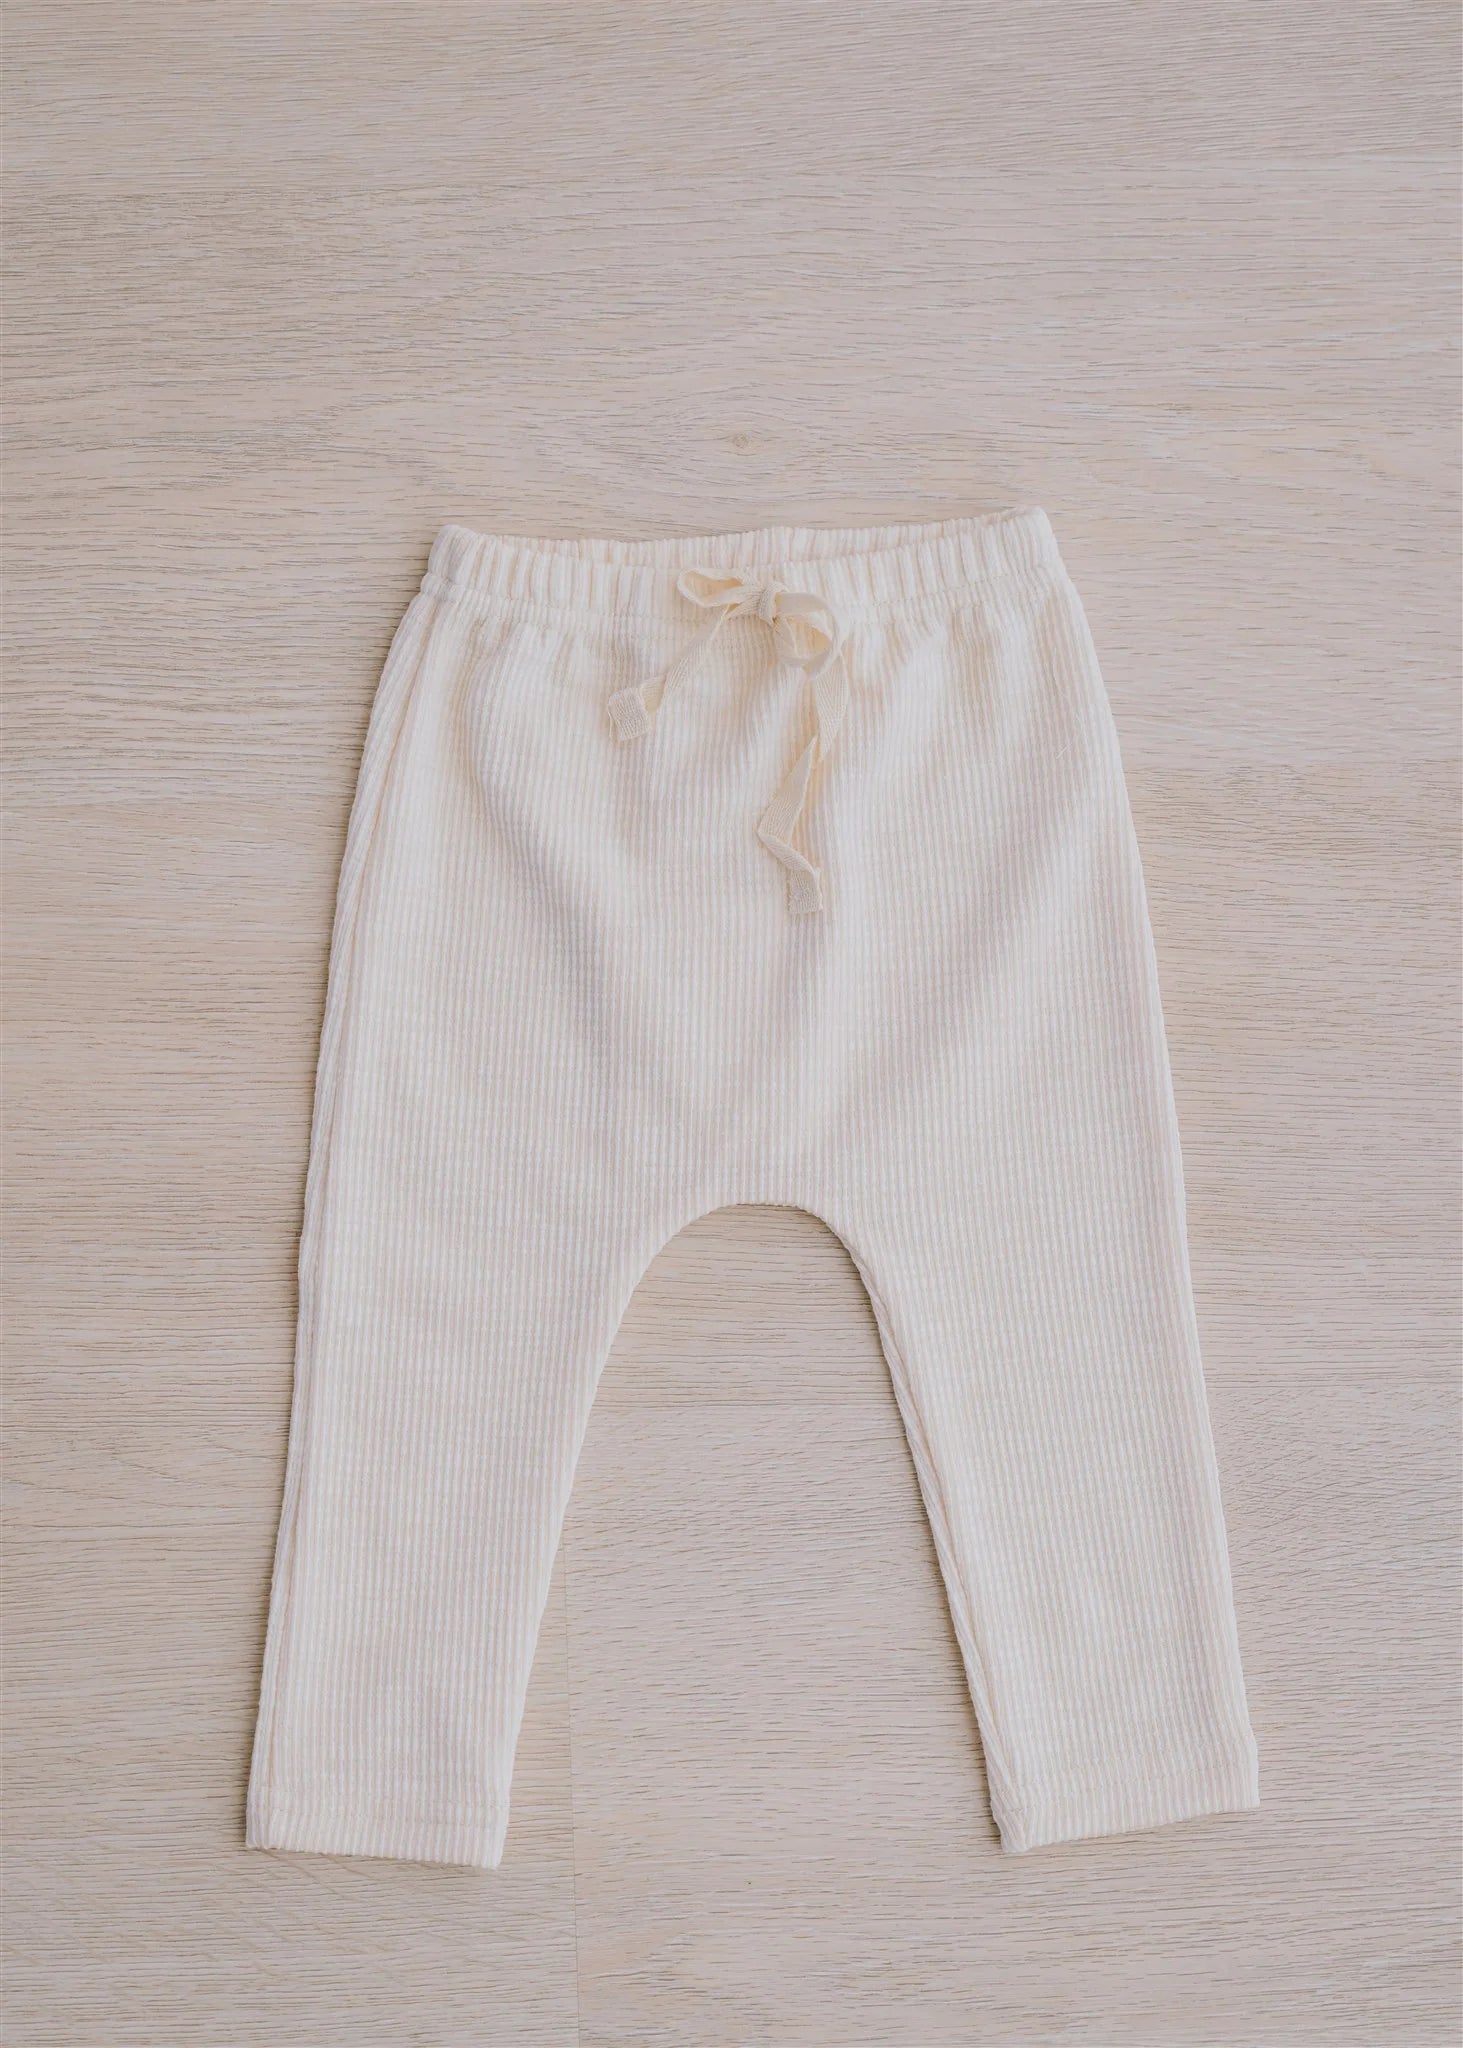 Cotton Drawstring Pants - Cream